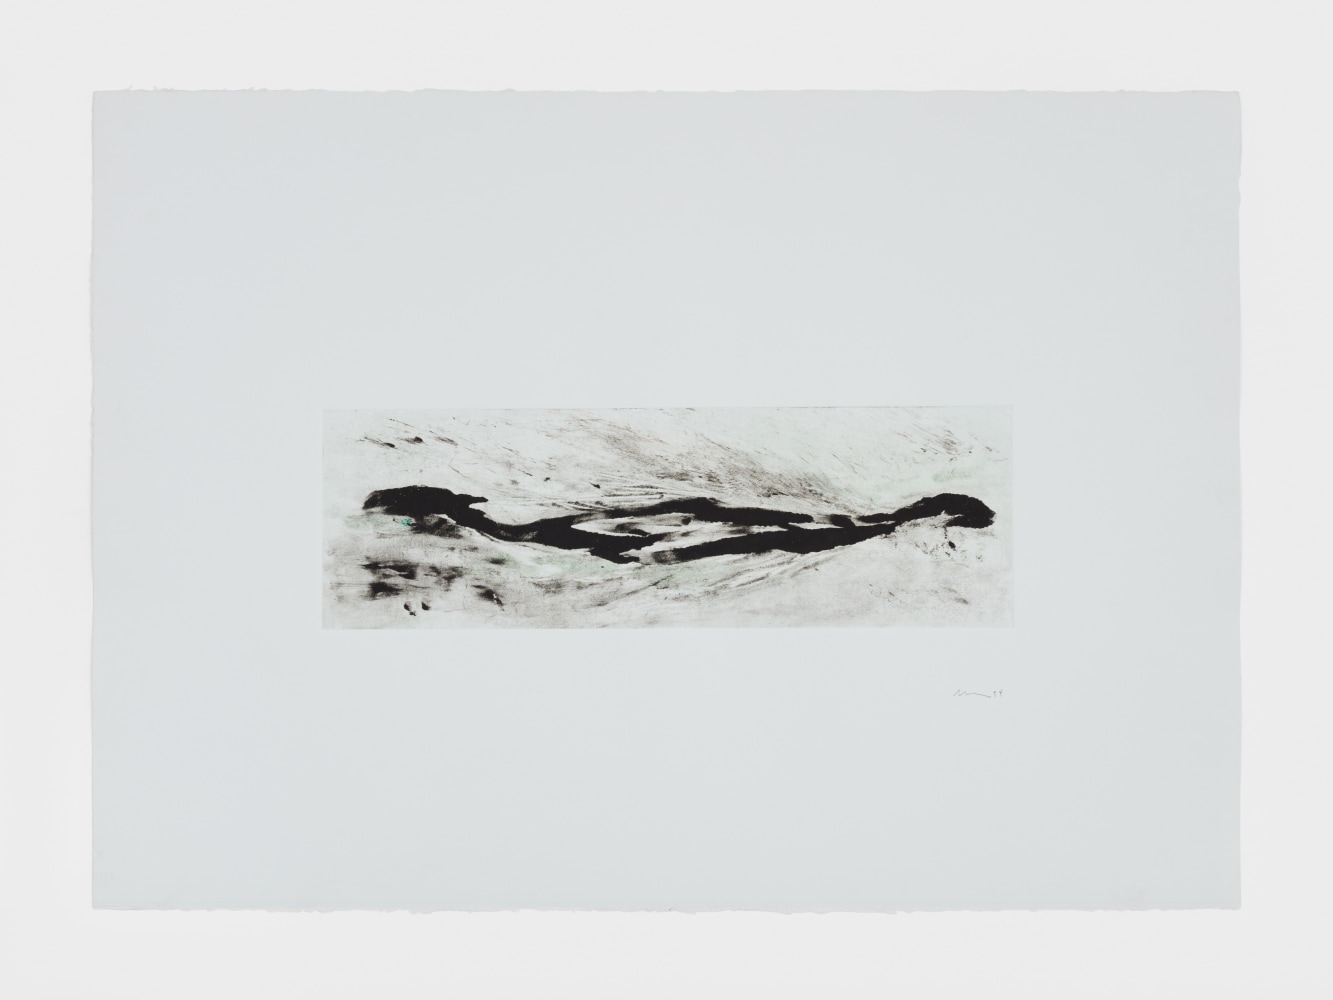 Laura Anderson Barbata

Untitled, 1994

monotype

22 1/8 x 29 3/4 in. / 56.2 x 75.6 cm